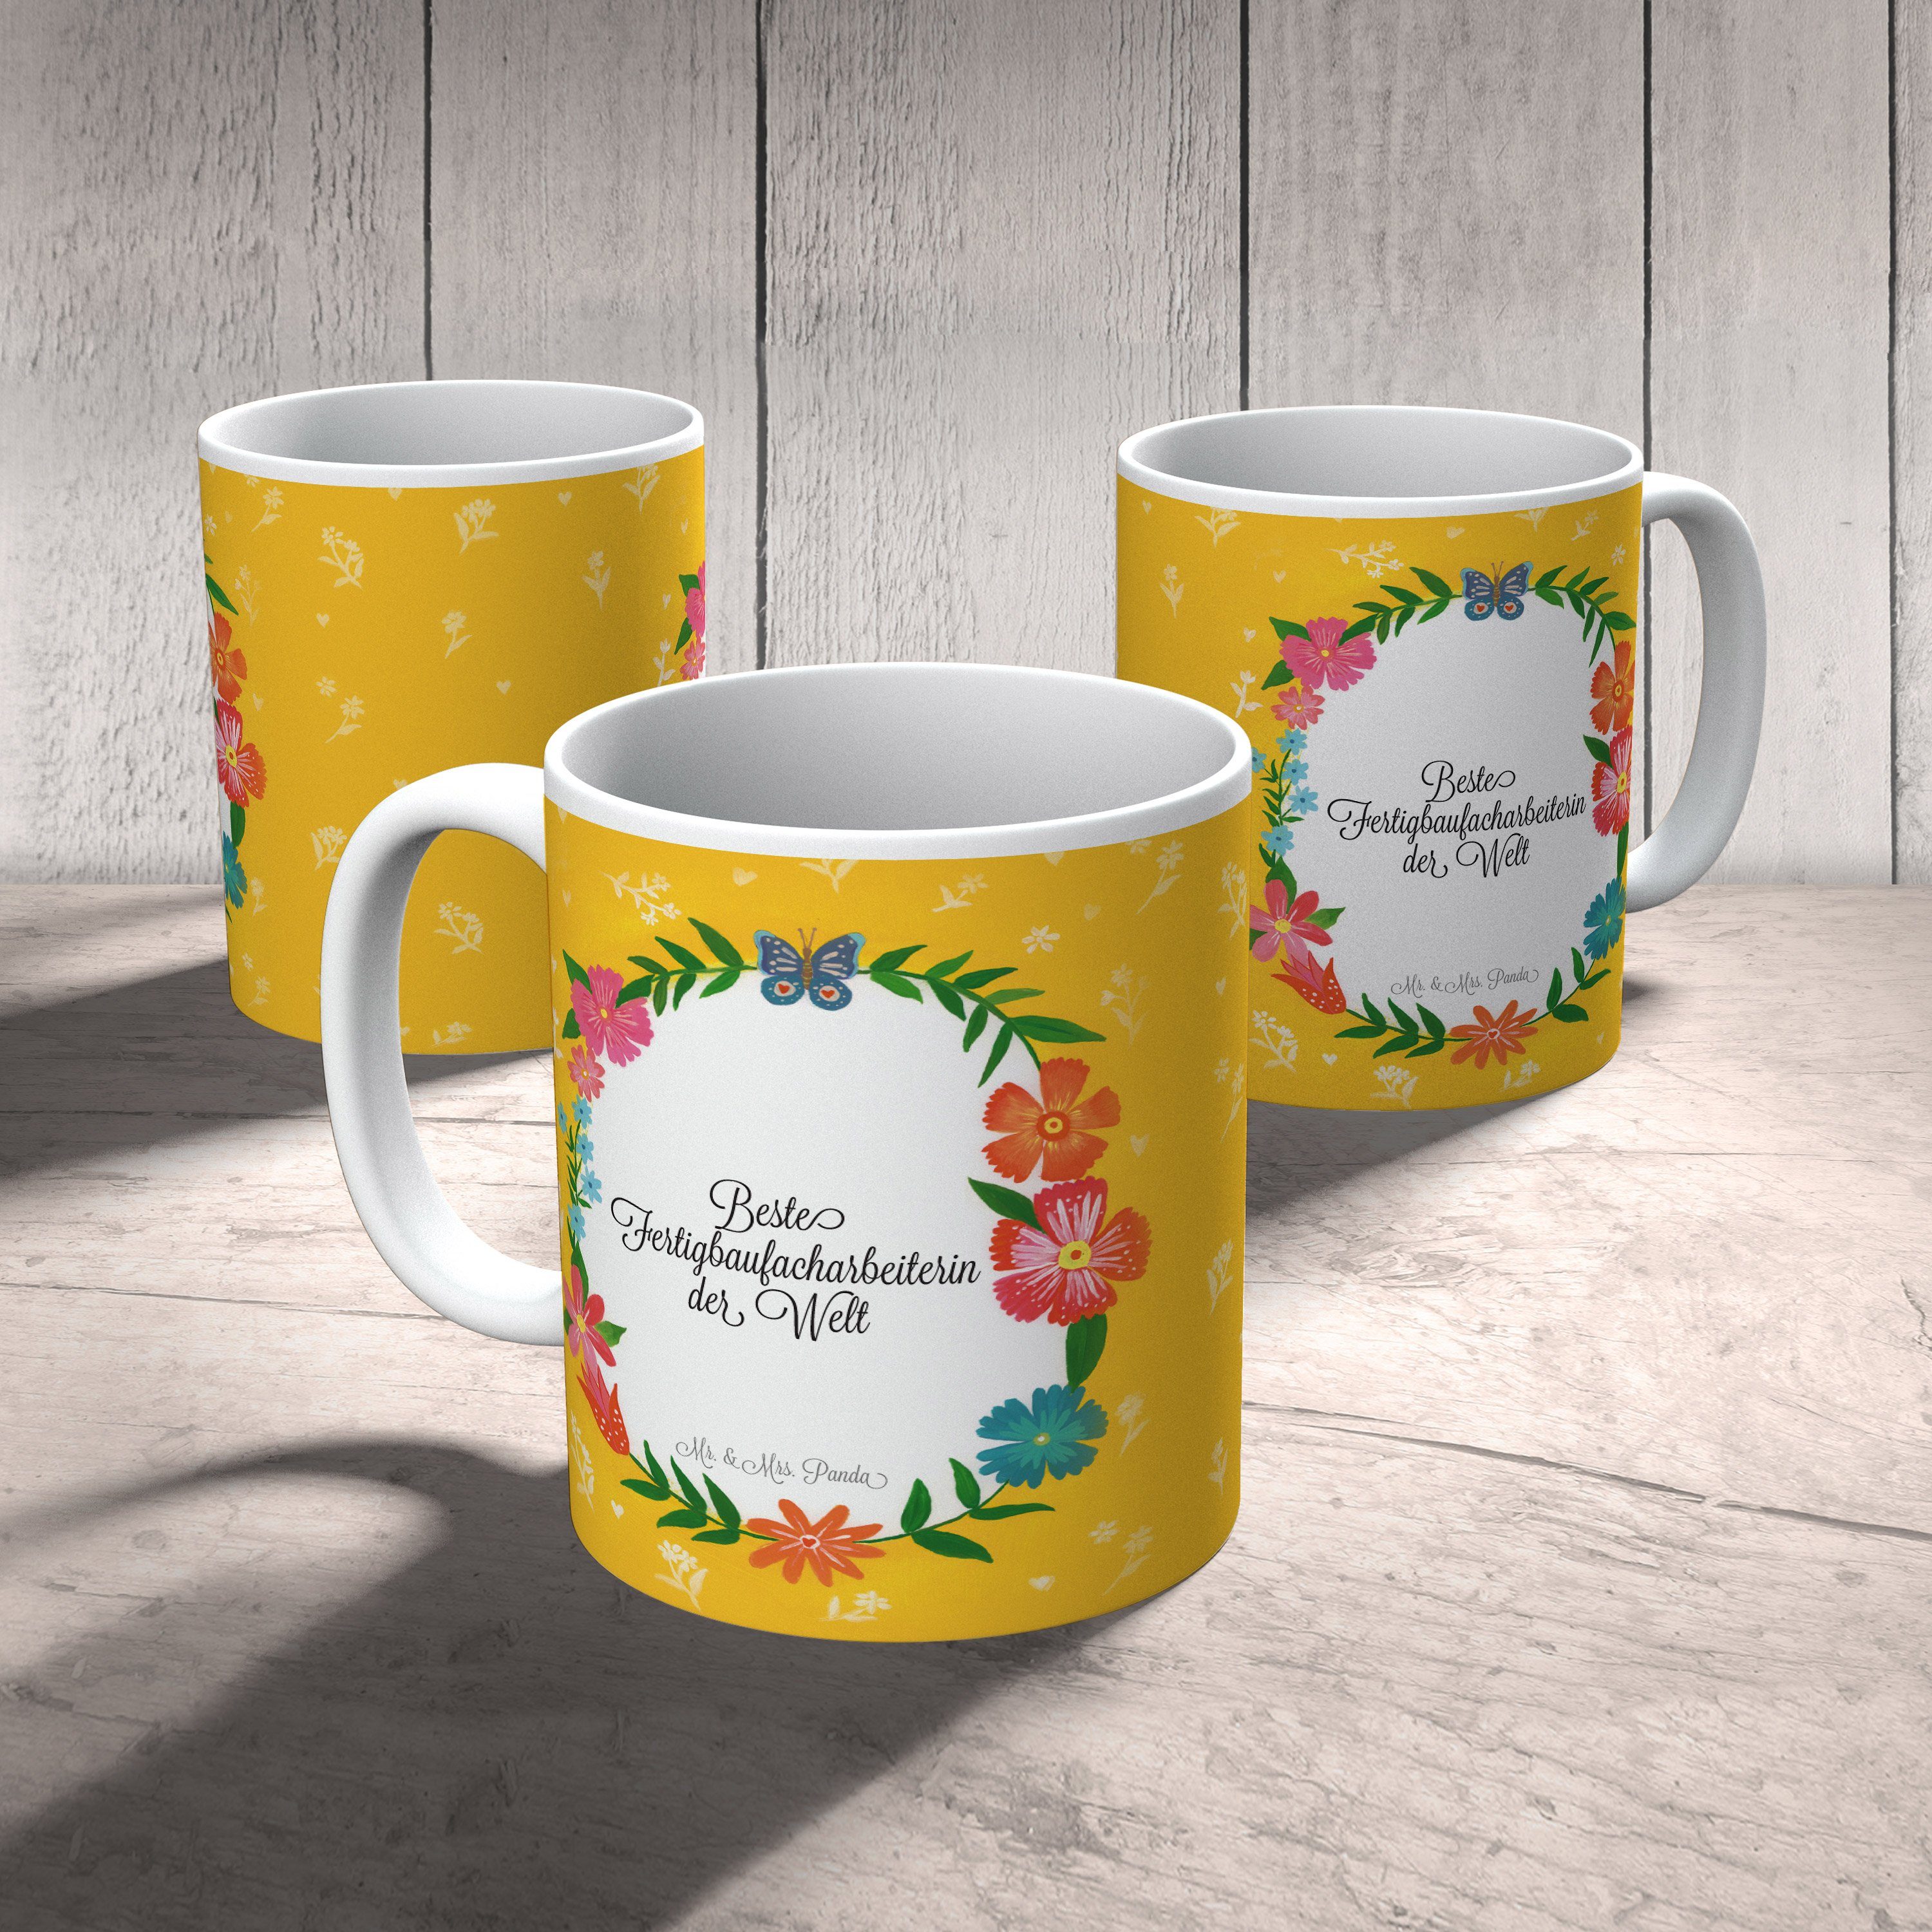 Mr. & - Tasse Keramik Tasse, Ber, Panda Rente, Tasse, Mrs. Fertigbaufacharbeiterin Geschenk, Geschenk